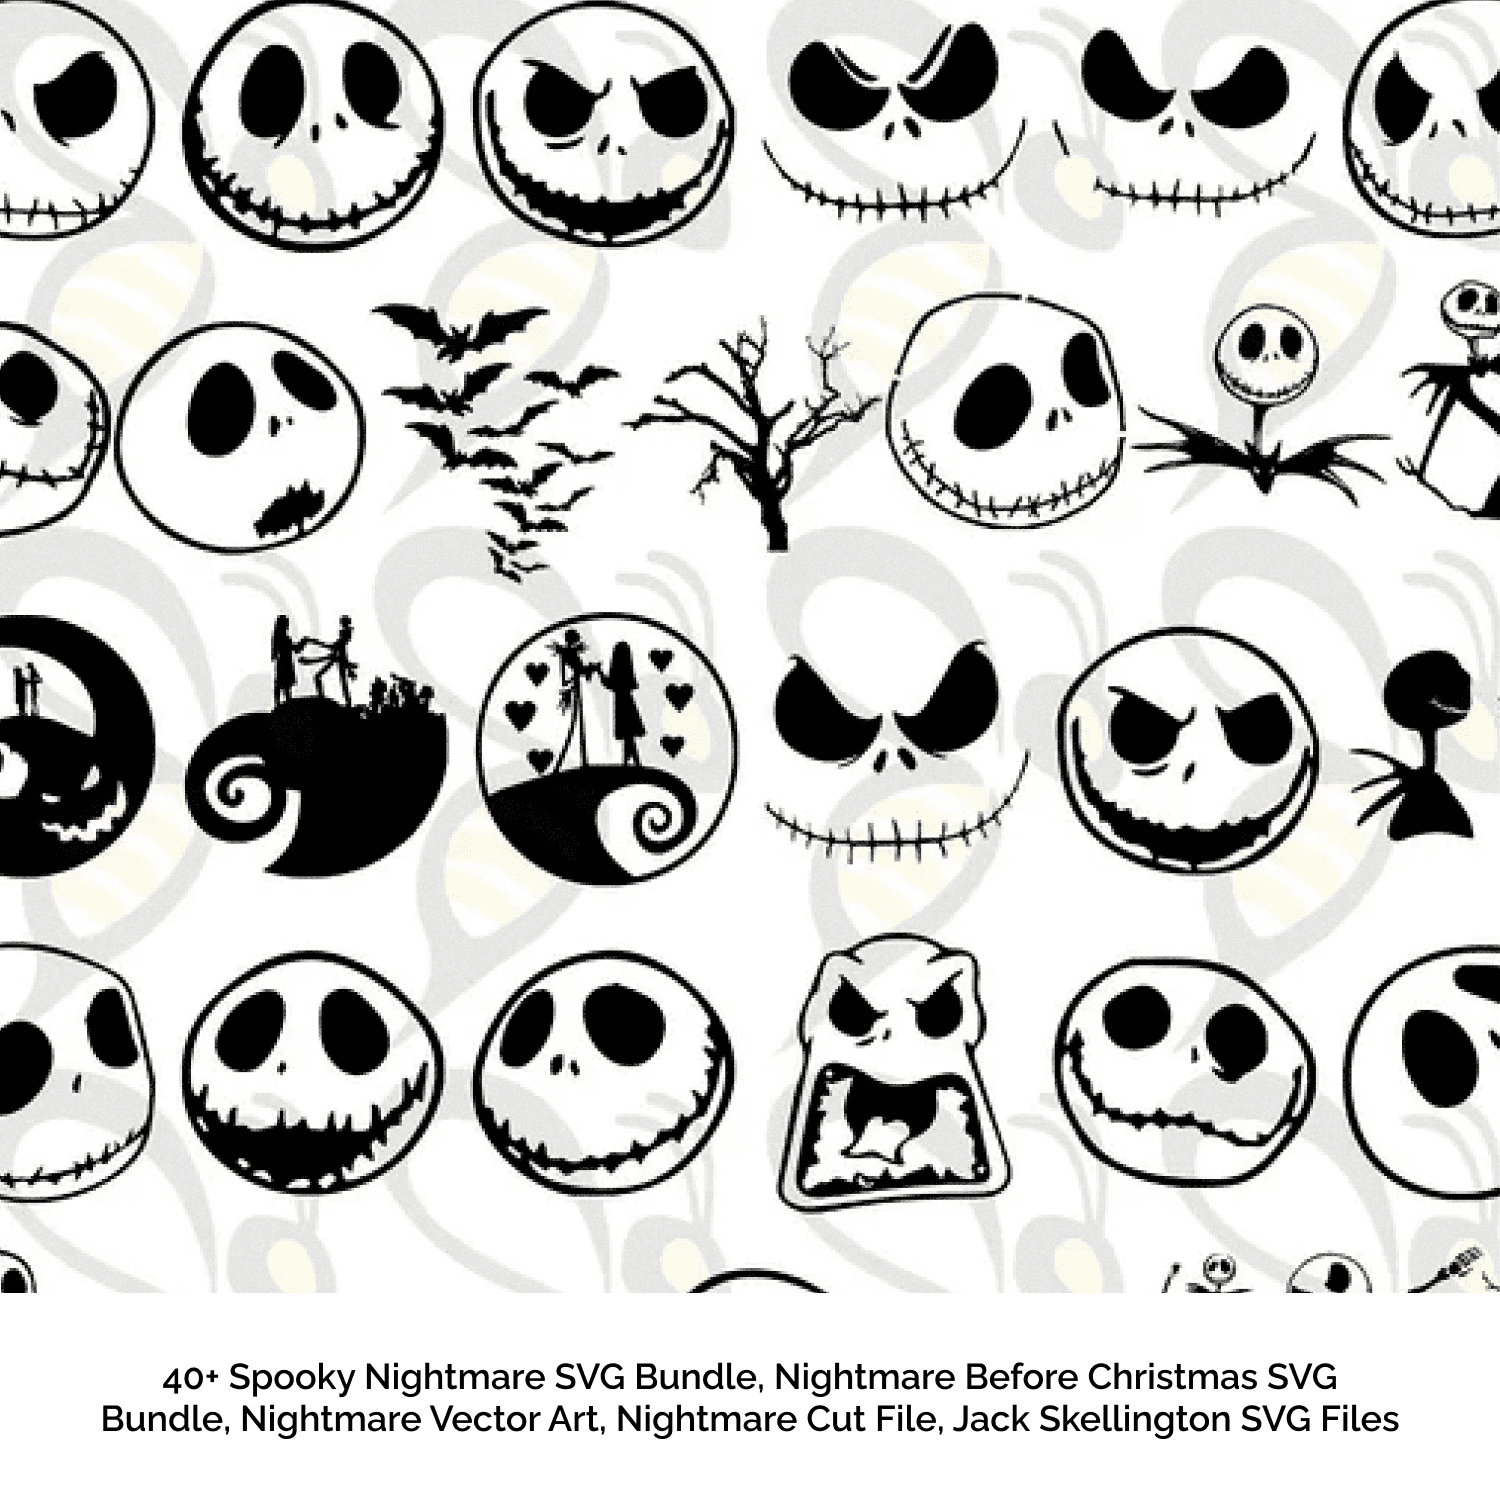 Spooky Nightmare SVG Bundle.